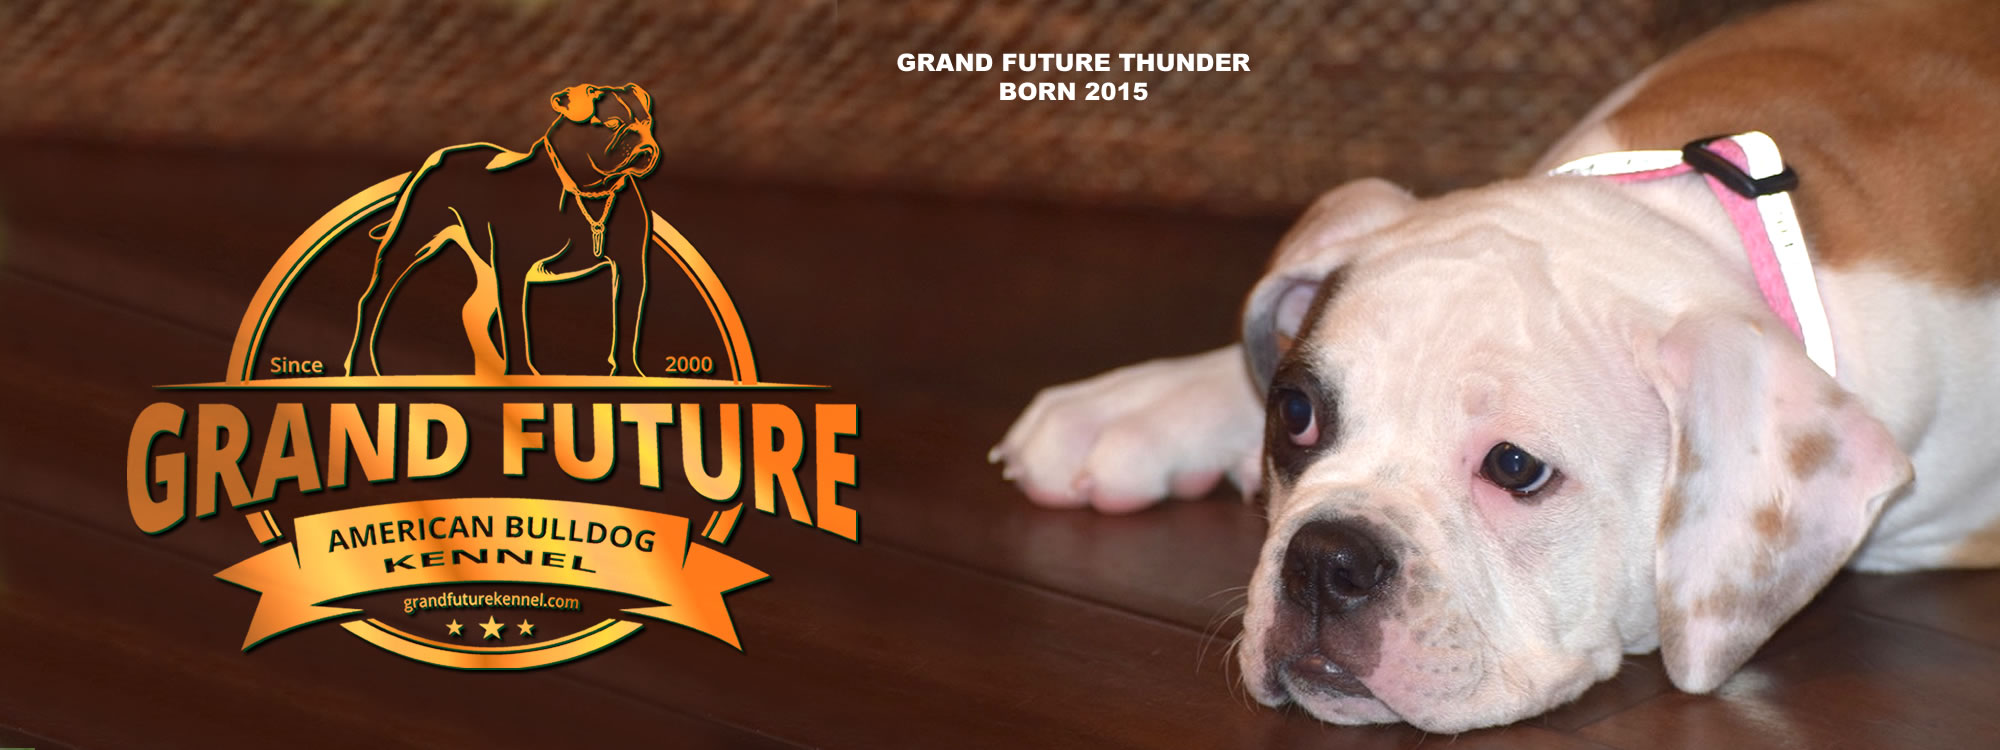 Champion Pedigree American Bulldog Puppies for Sale - GRAND FUTURE KENNEL - American Bulldog Kennel